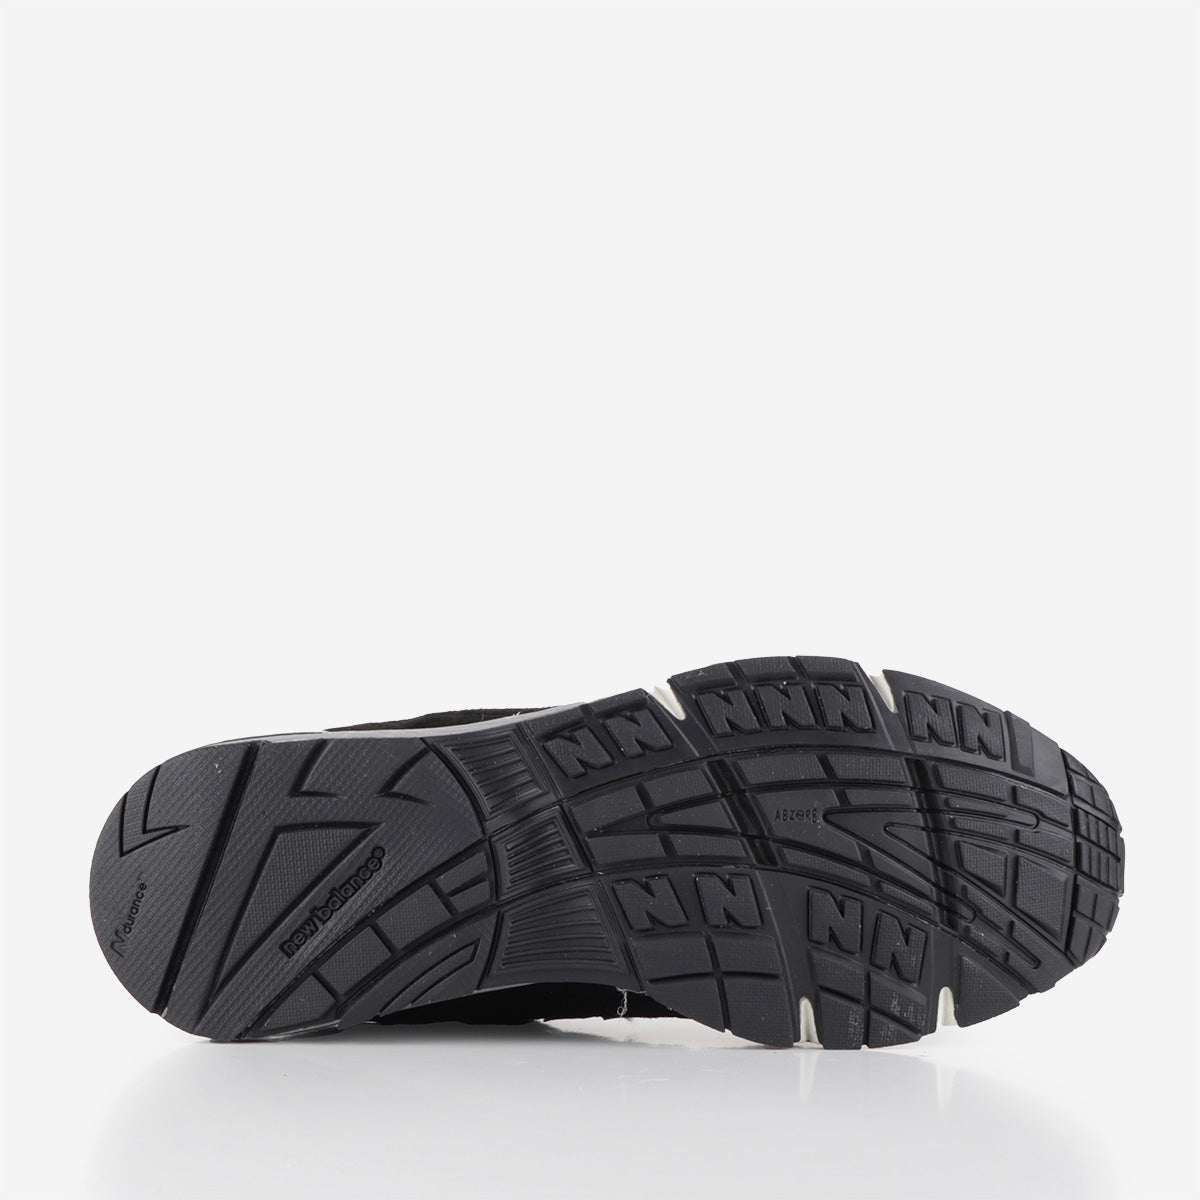 New Balance M991EKS Shoes, Black Silver, Detail Shot 4